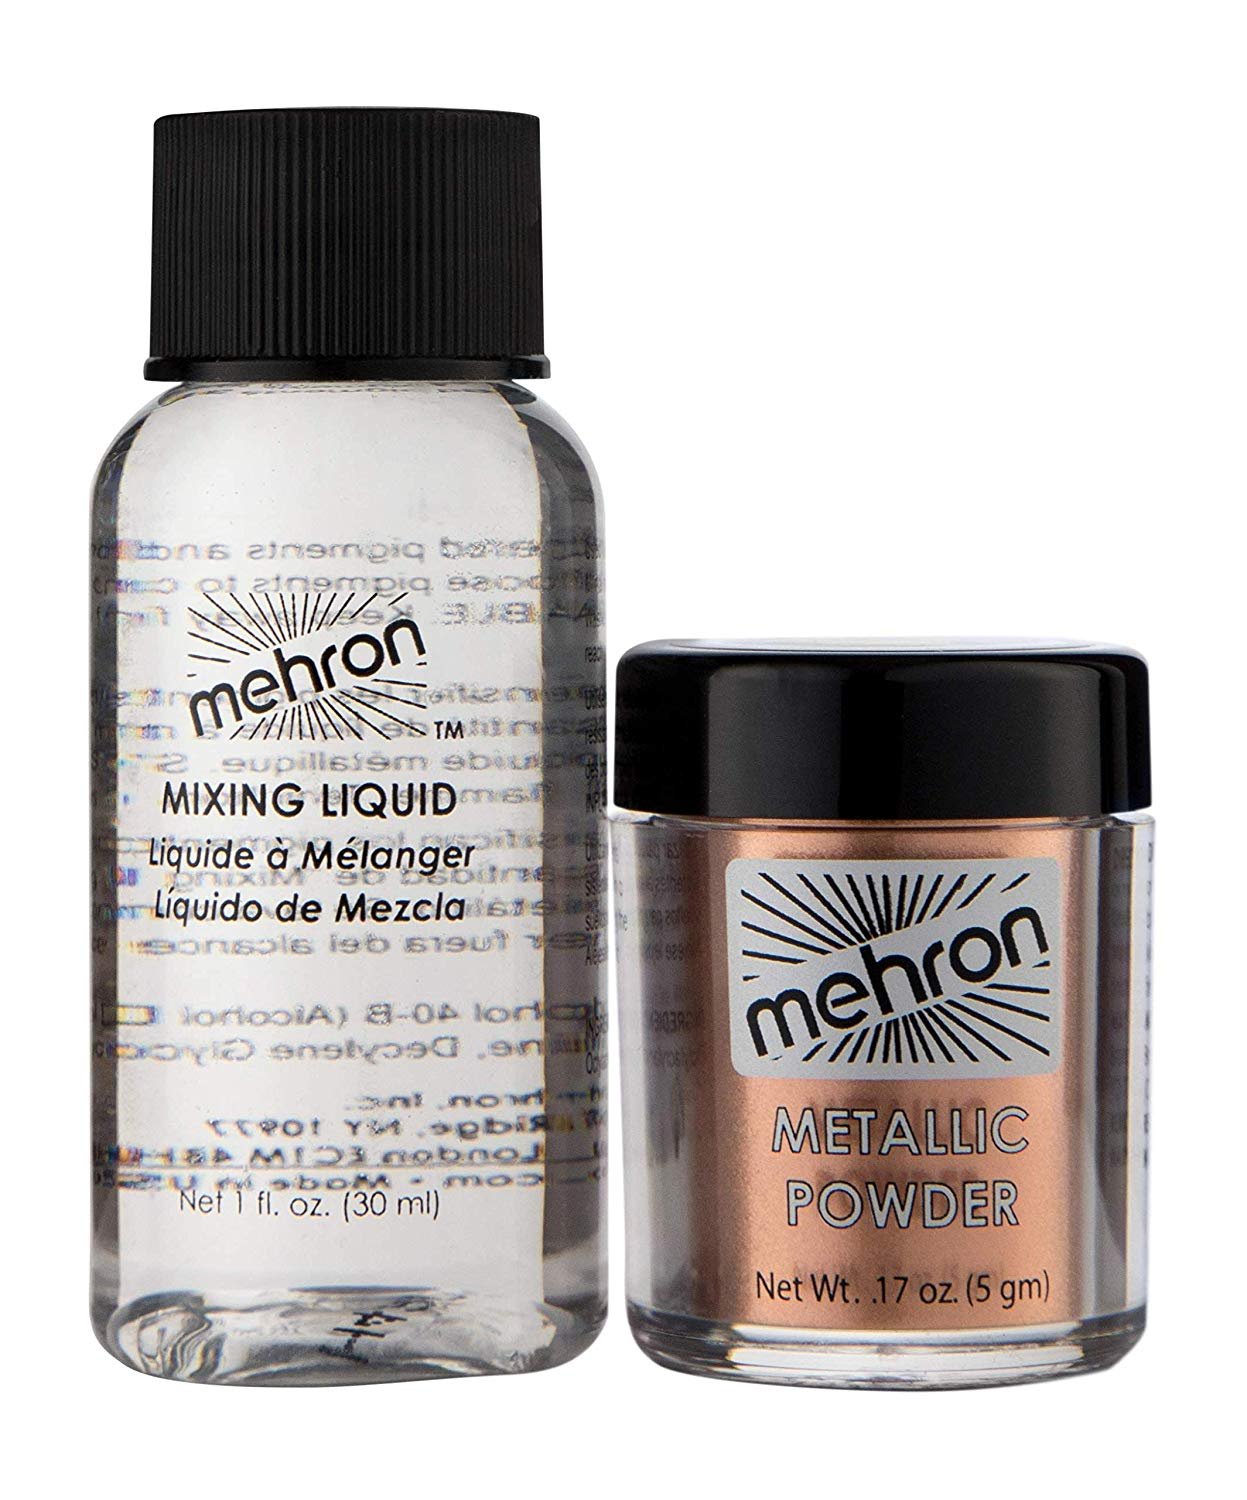 Mehron Makeup Metallic Powder (.17 oz) with Mixing Liquid (1 oz) (LAVENDER)